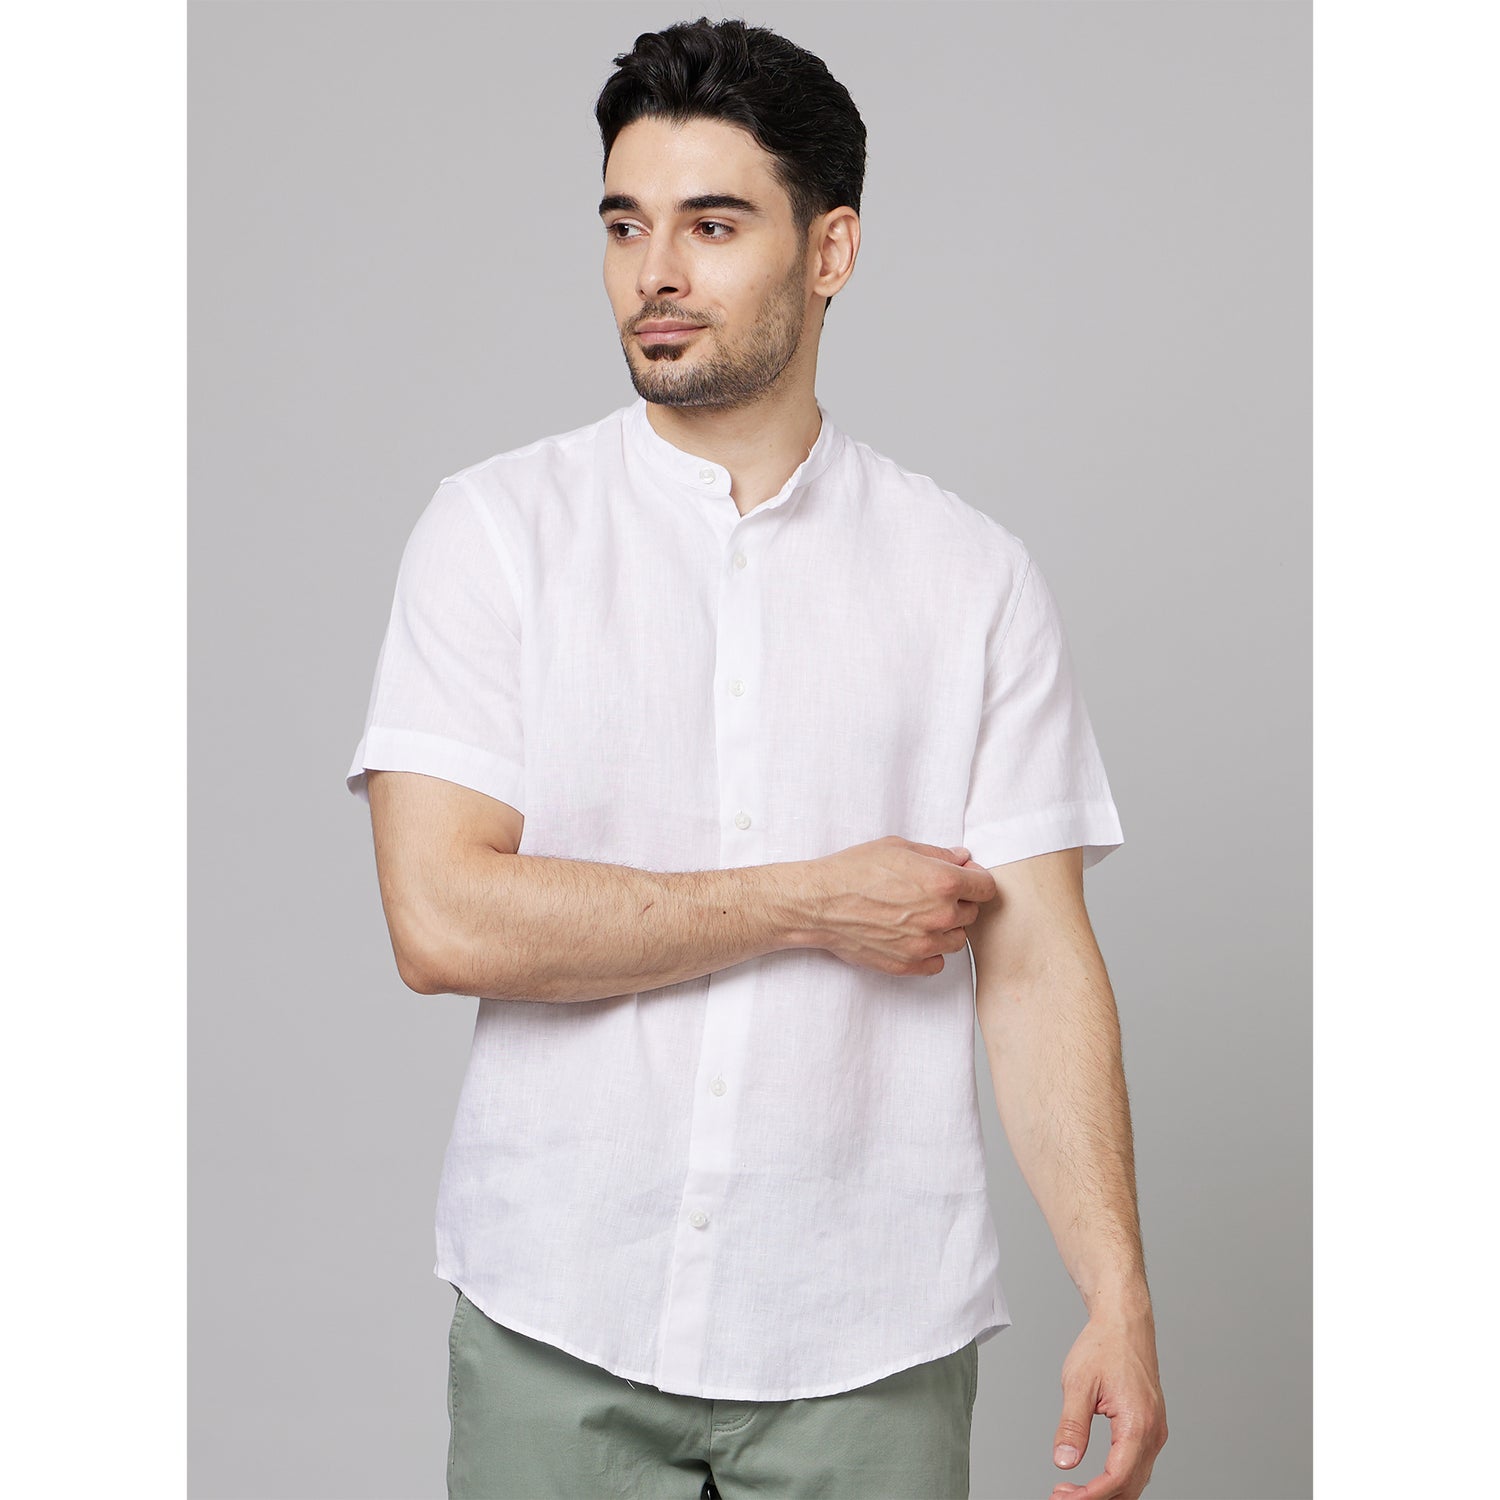 White Classic Linen Casual Shirt (DAMAOPOC)